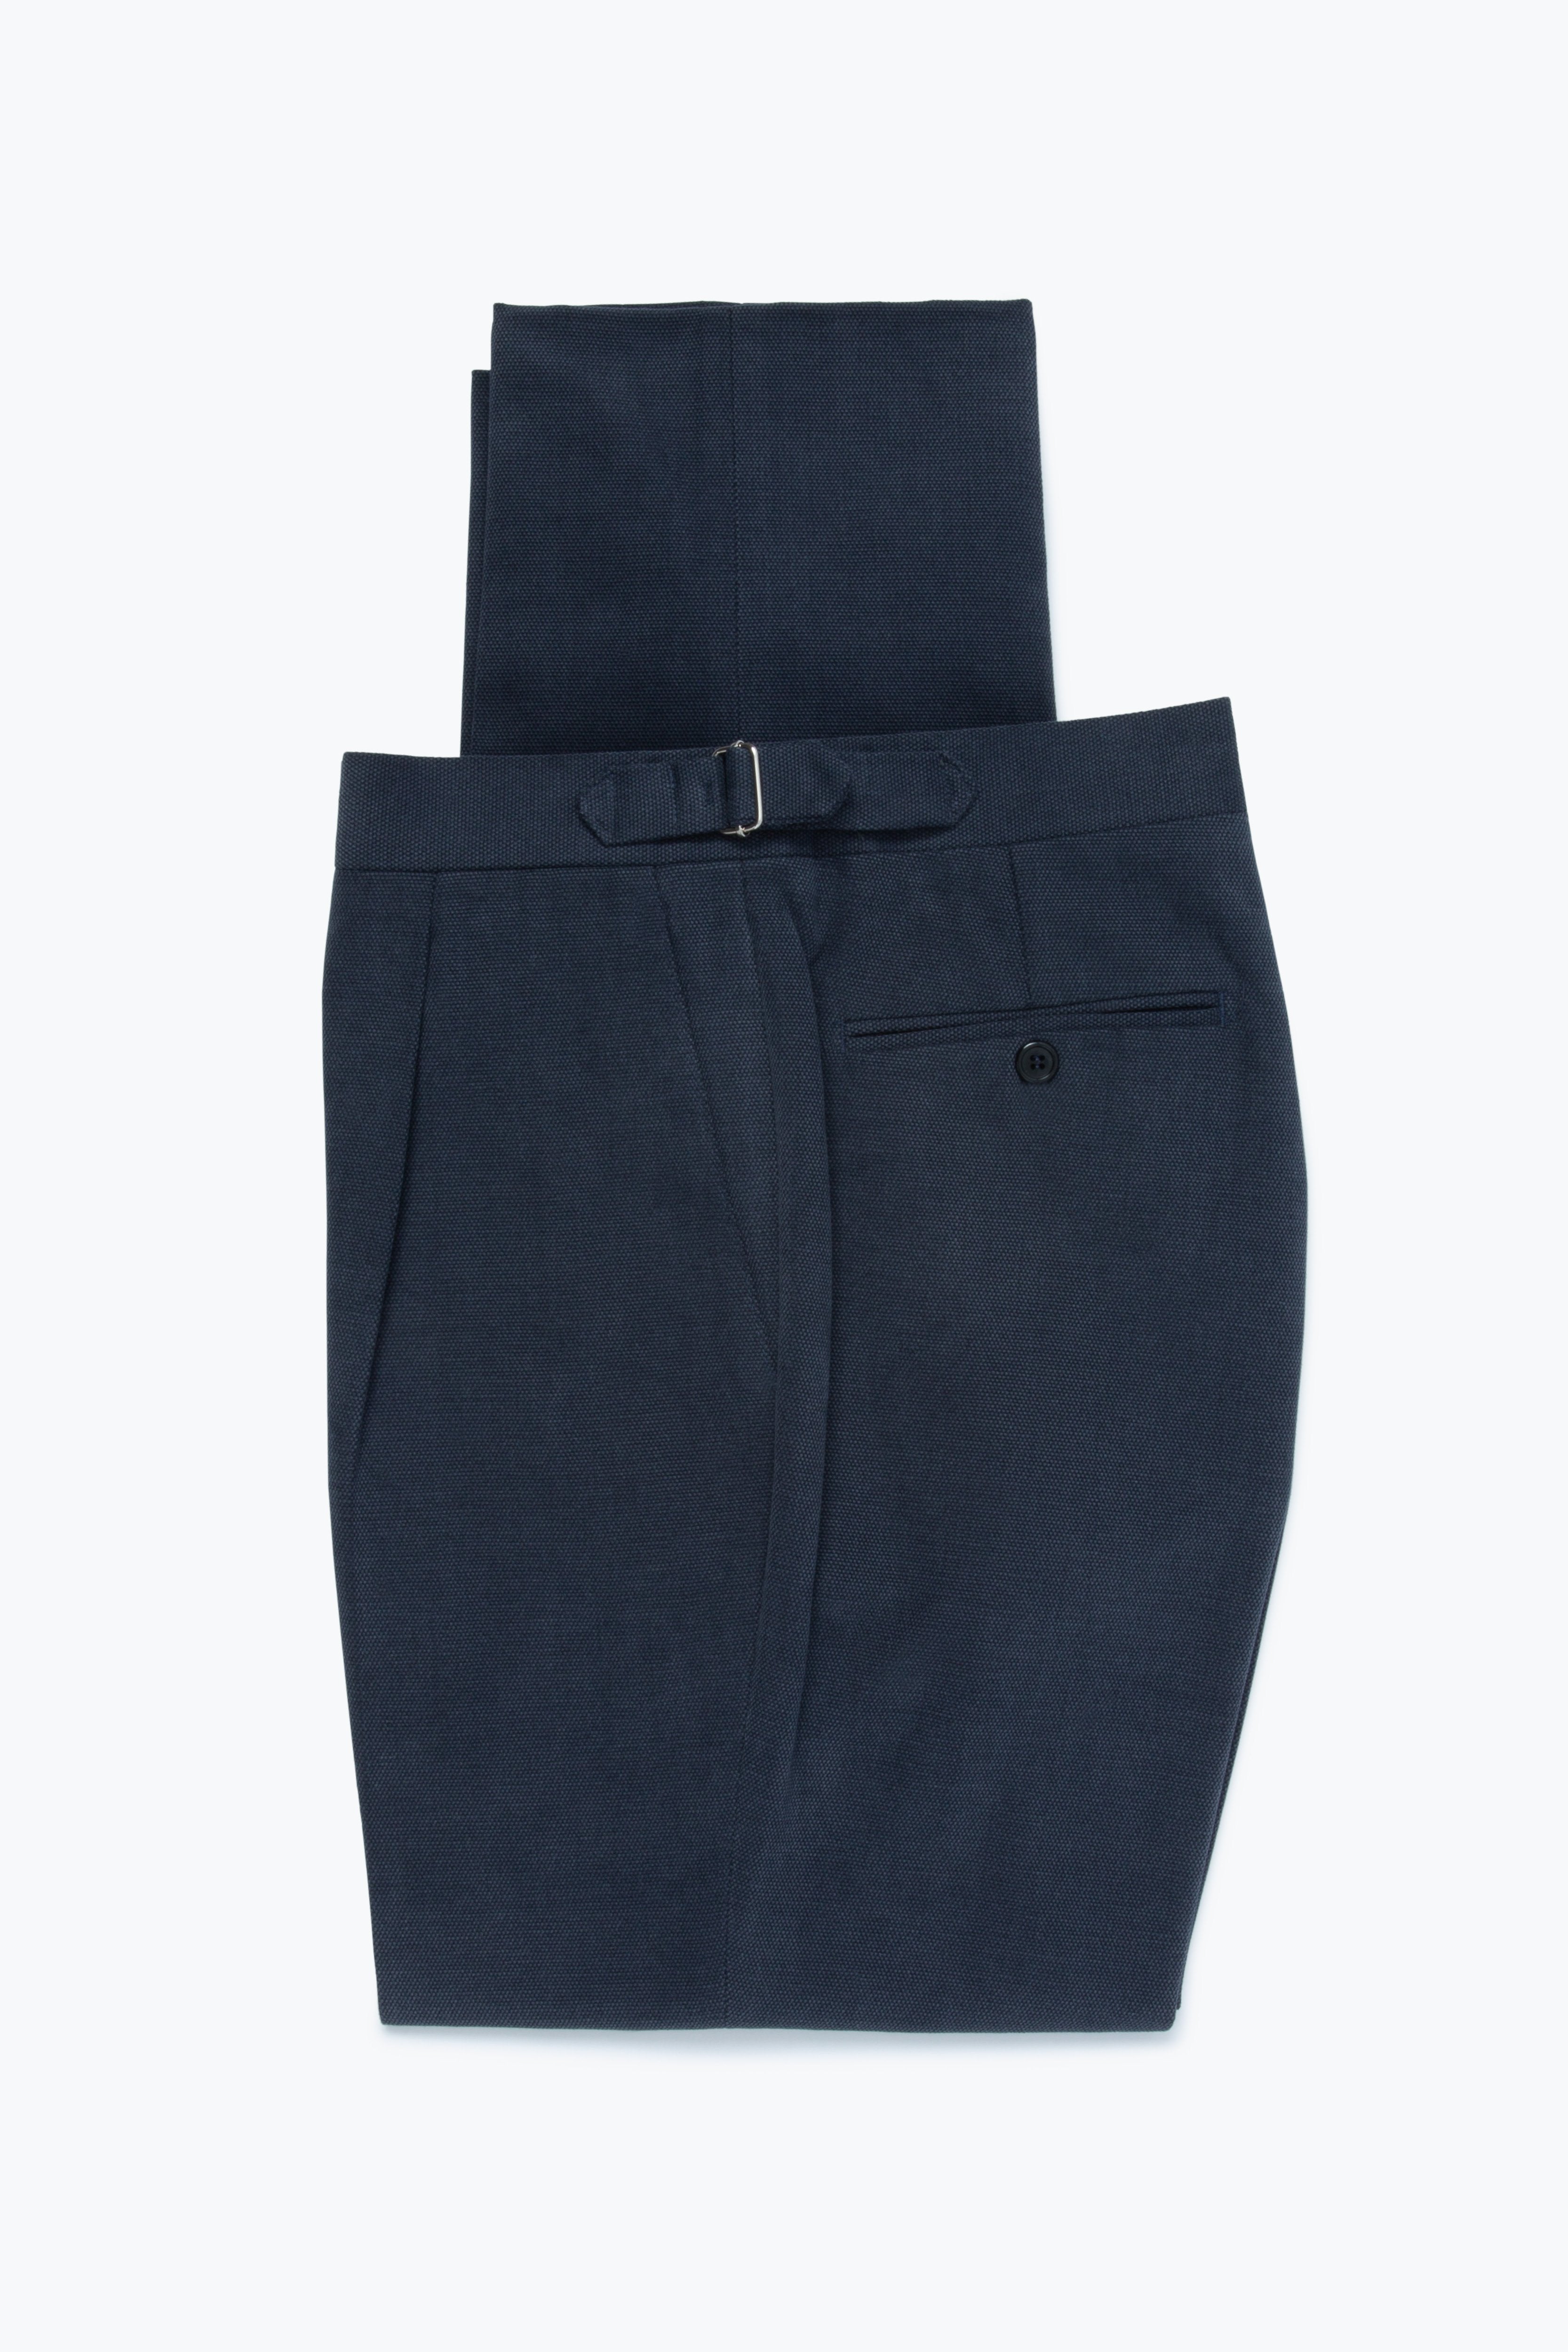 MTO - Single Pleat Trousers (Indigo Cotton Basketweave)